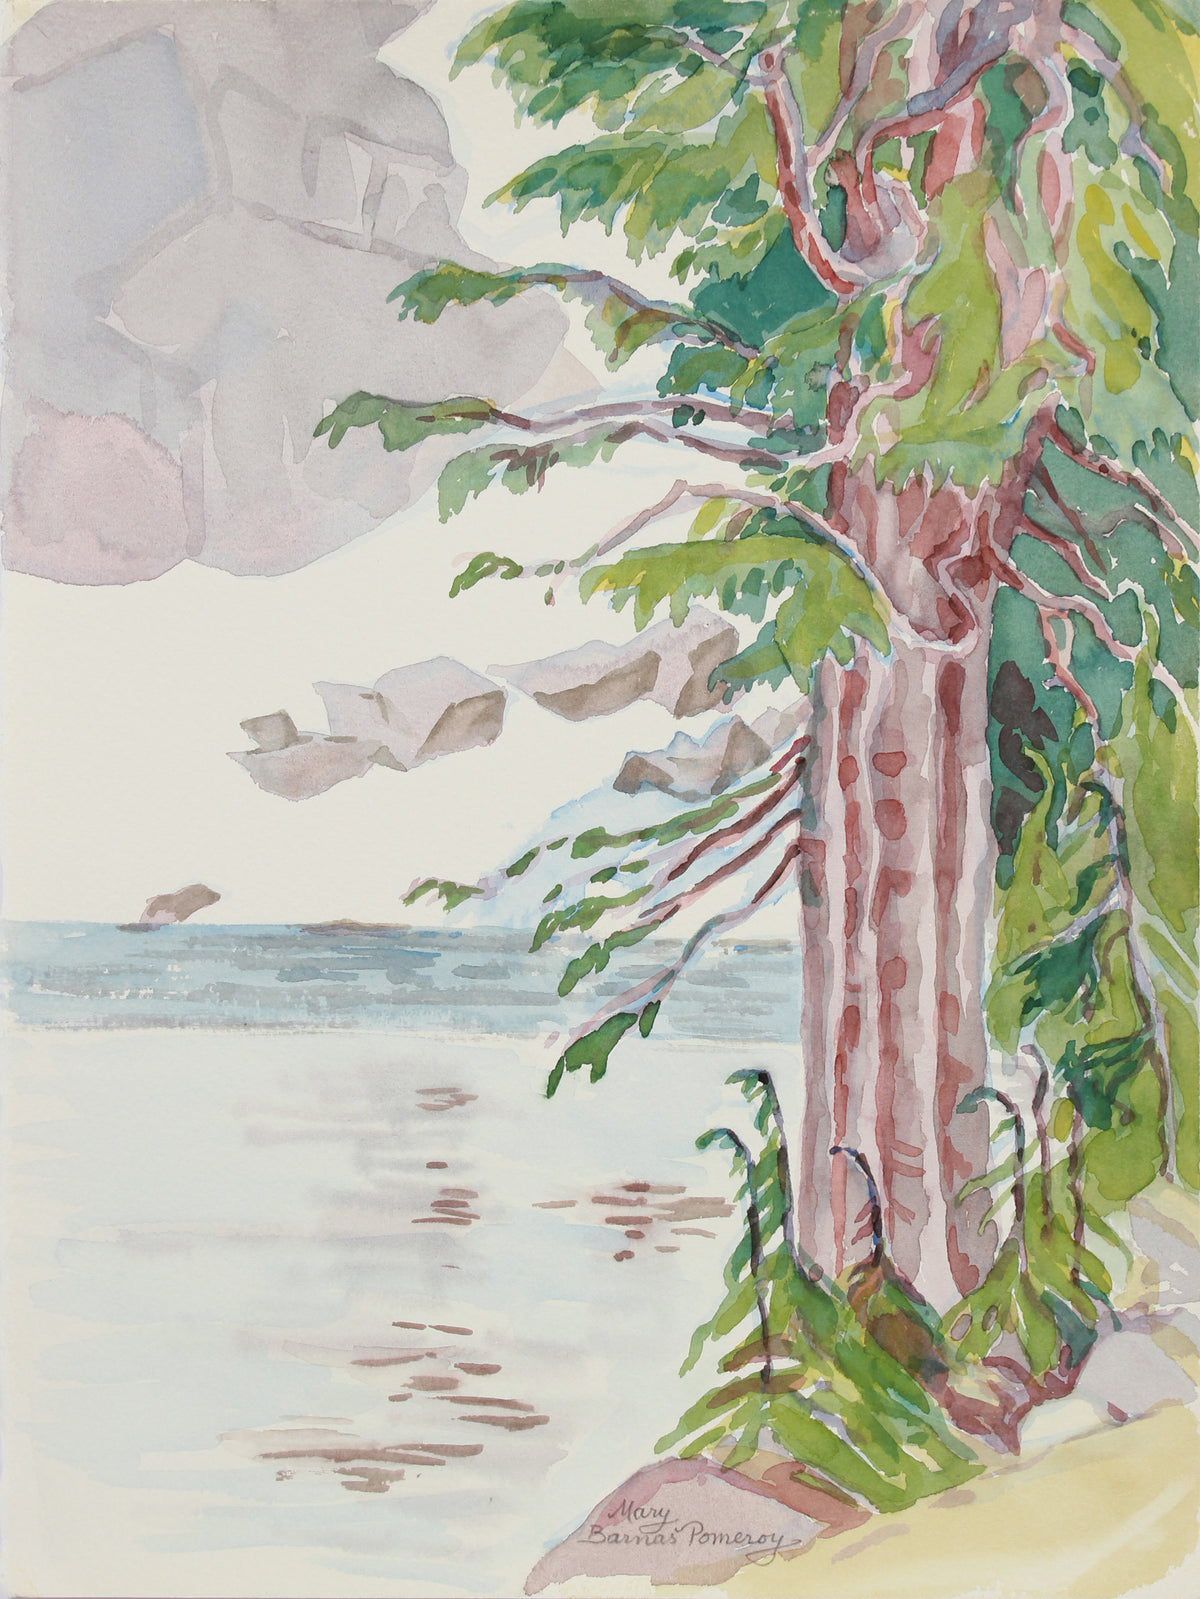 &lt;i&gt;Winnemucca Lake with Ancient Hemlocks&lt;/i&gt; &lt;br&gt;1999 Watercolor &lt;br&gt;&lt;br&gt;#A9952